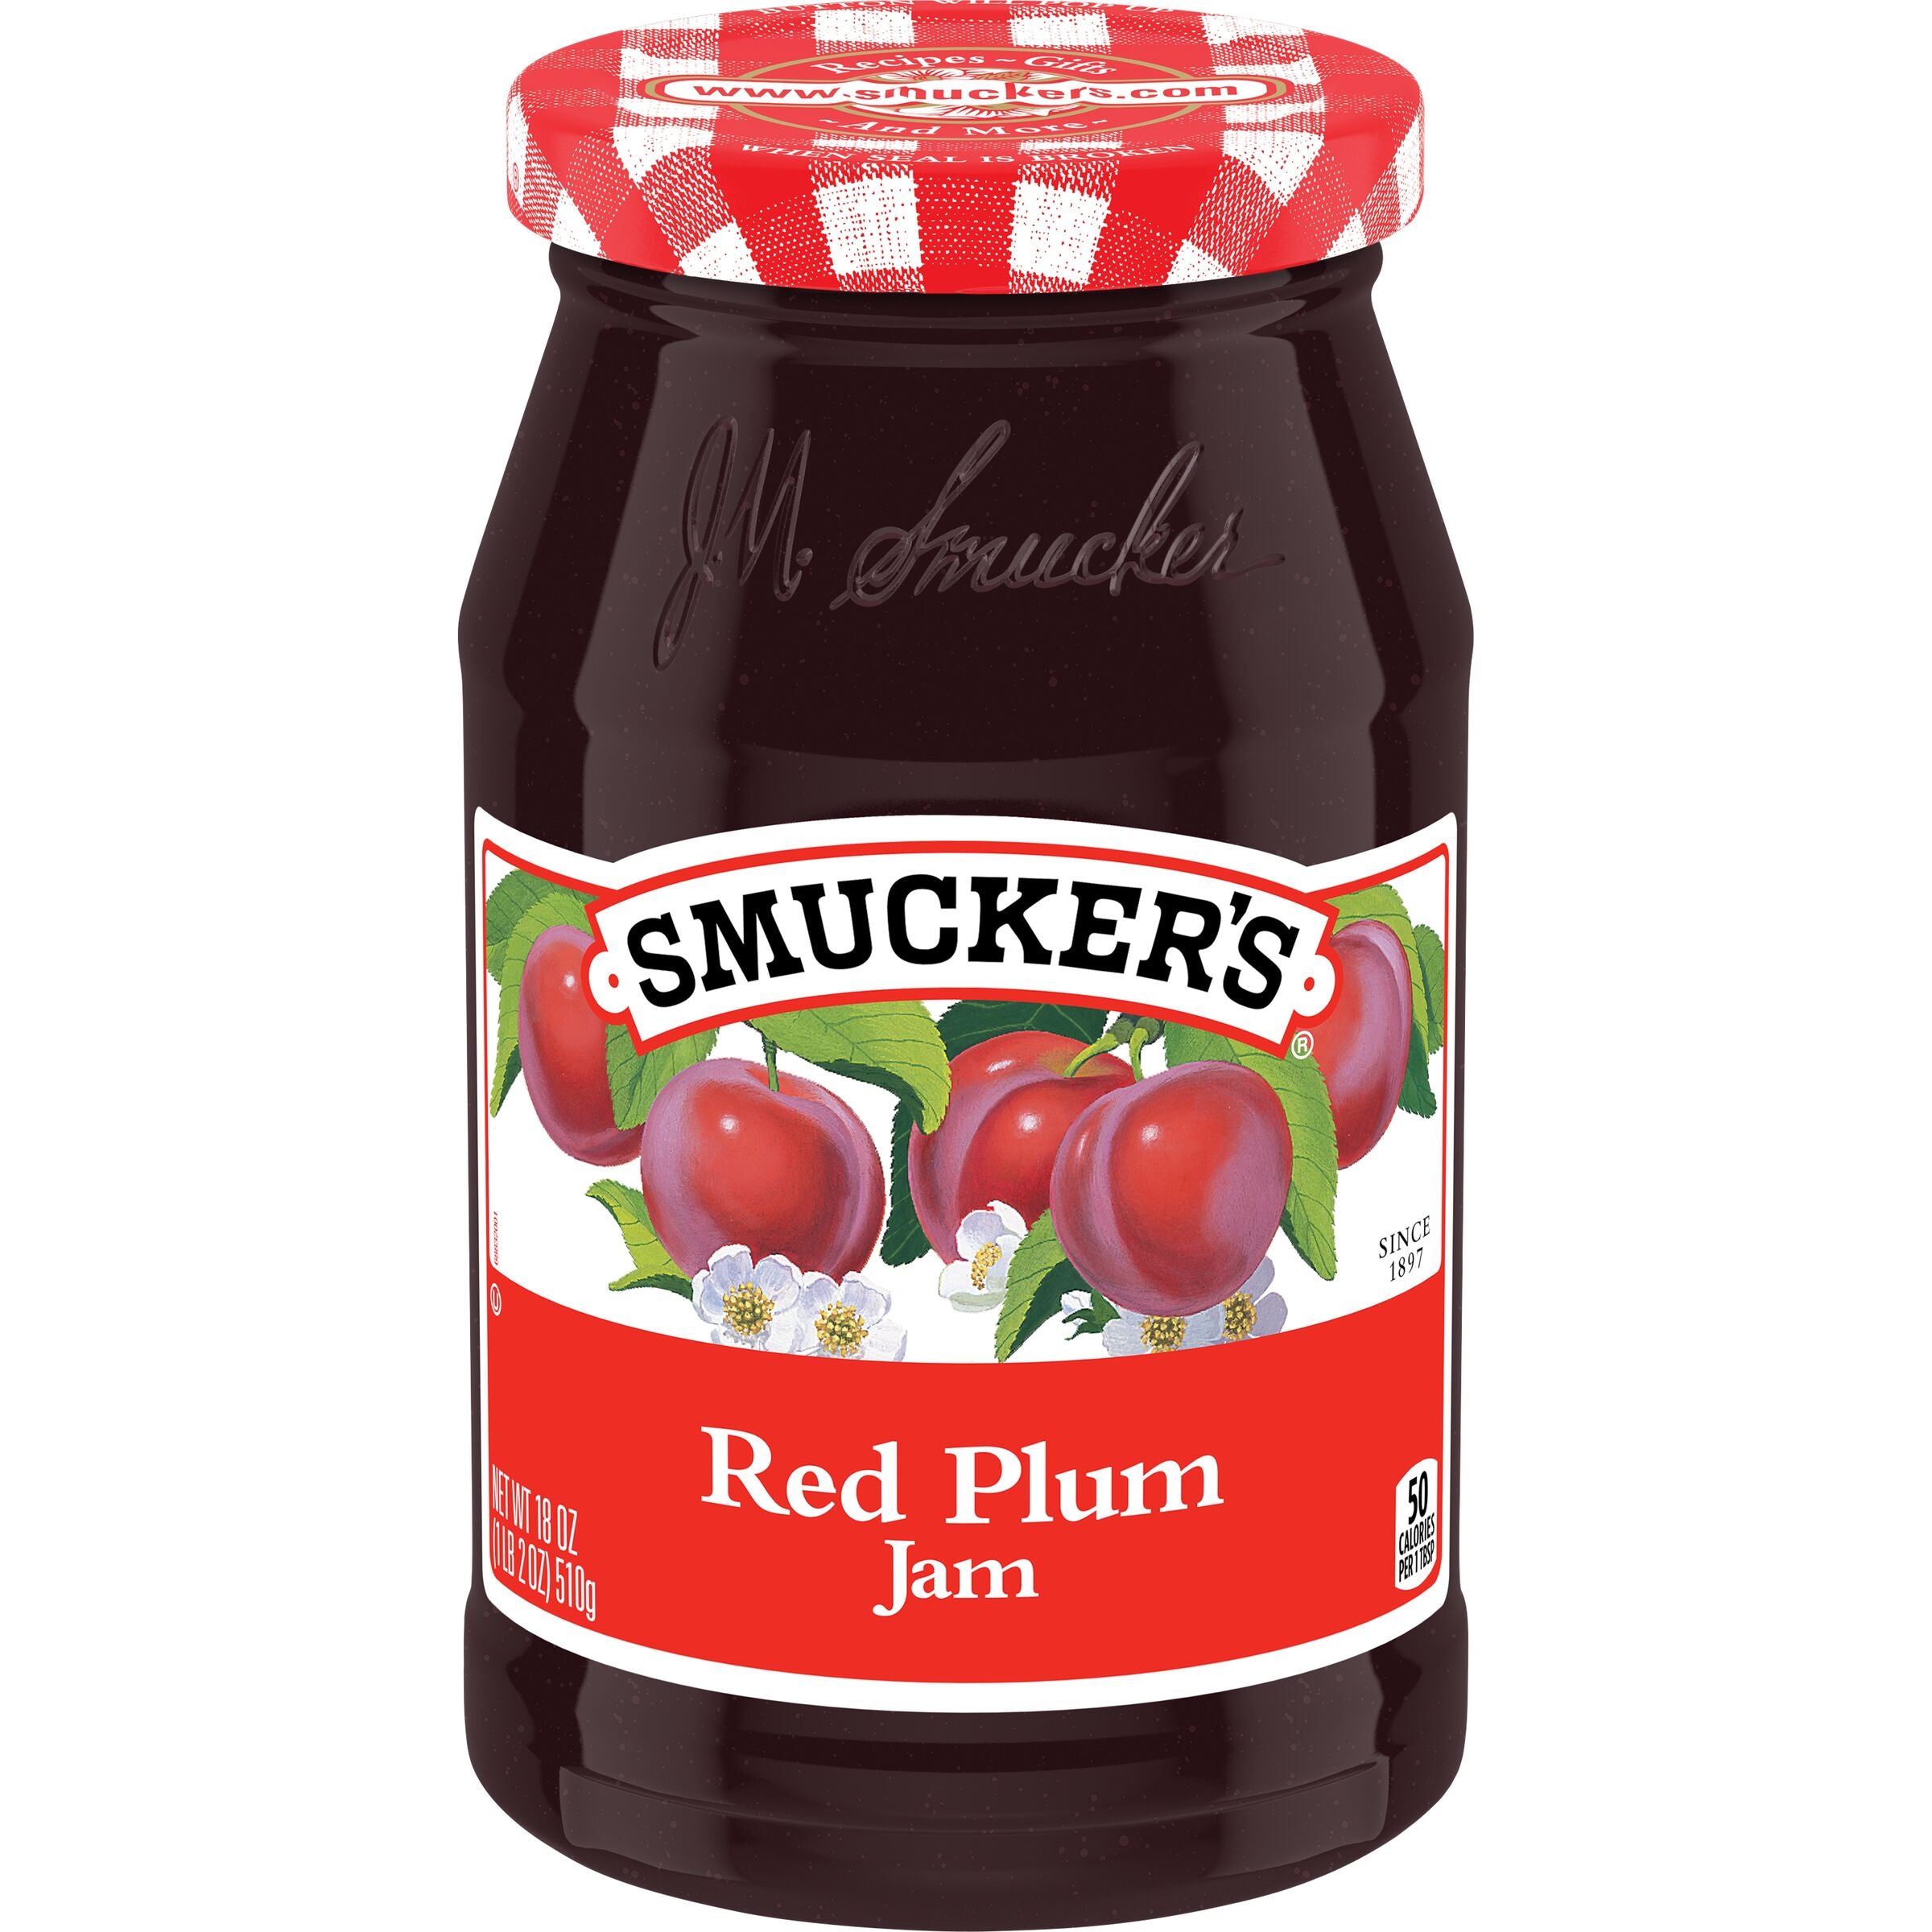 Smucker's Red Plum Jam, 18 oz